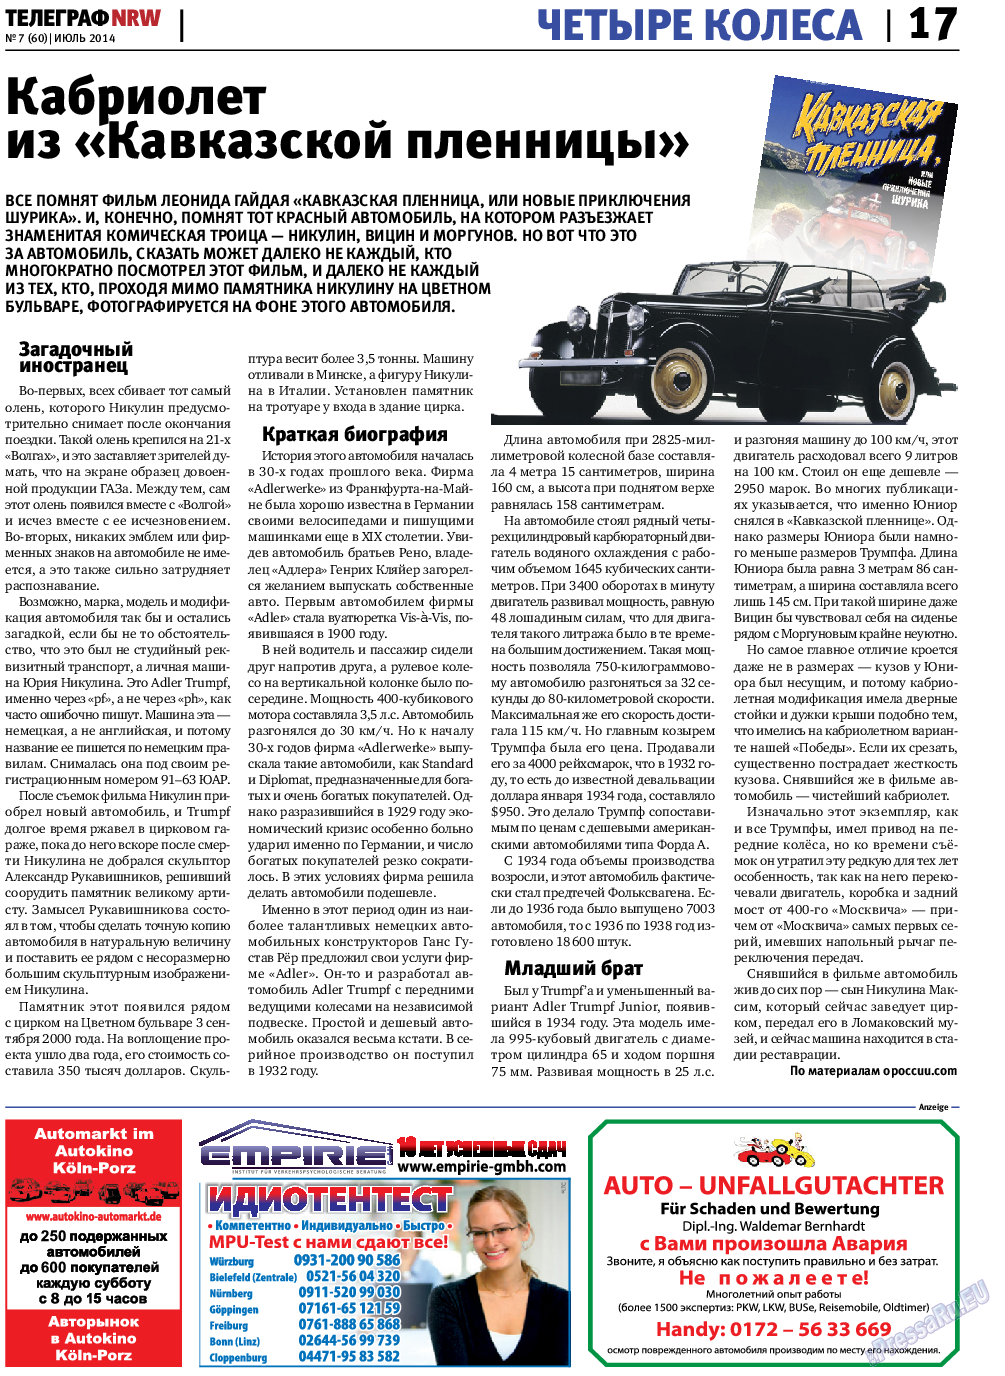 Телеграф NRW, газета. 2014 №7 стр.17